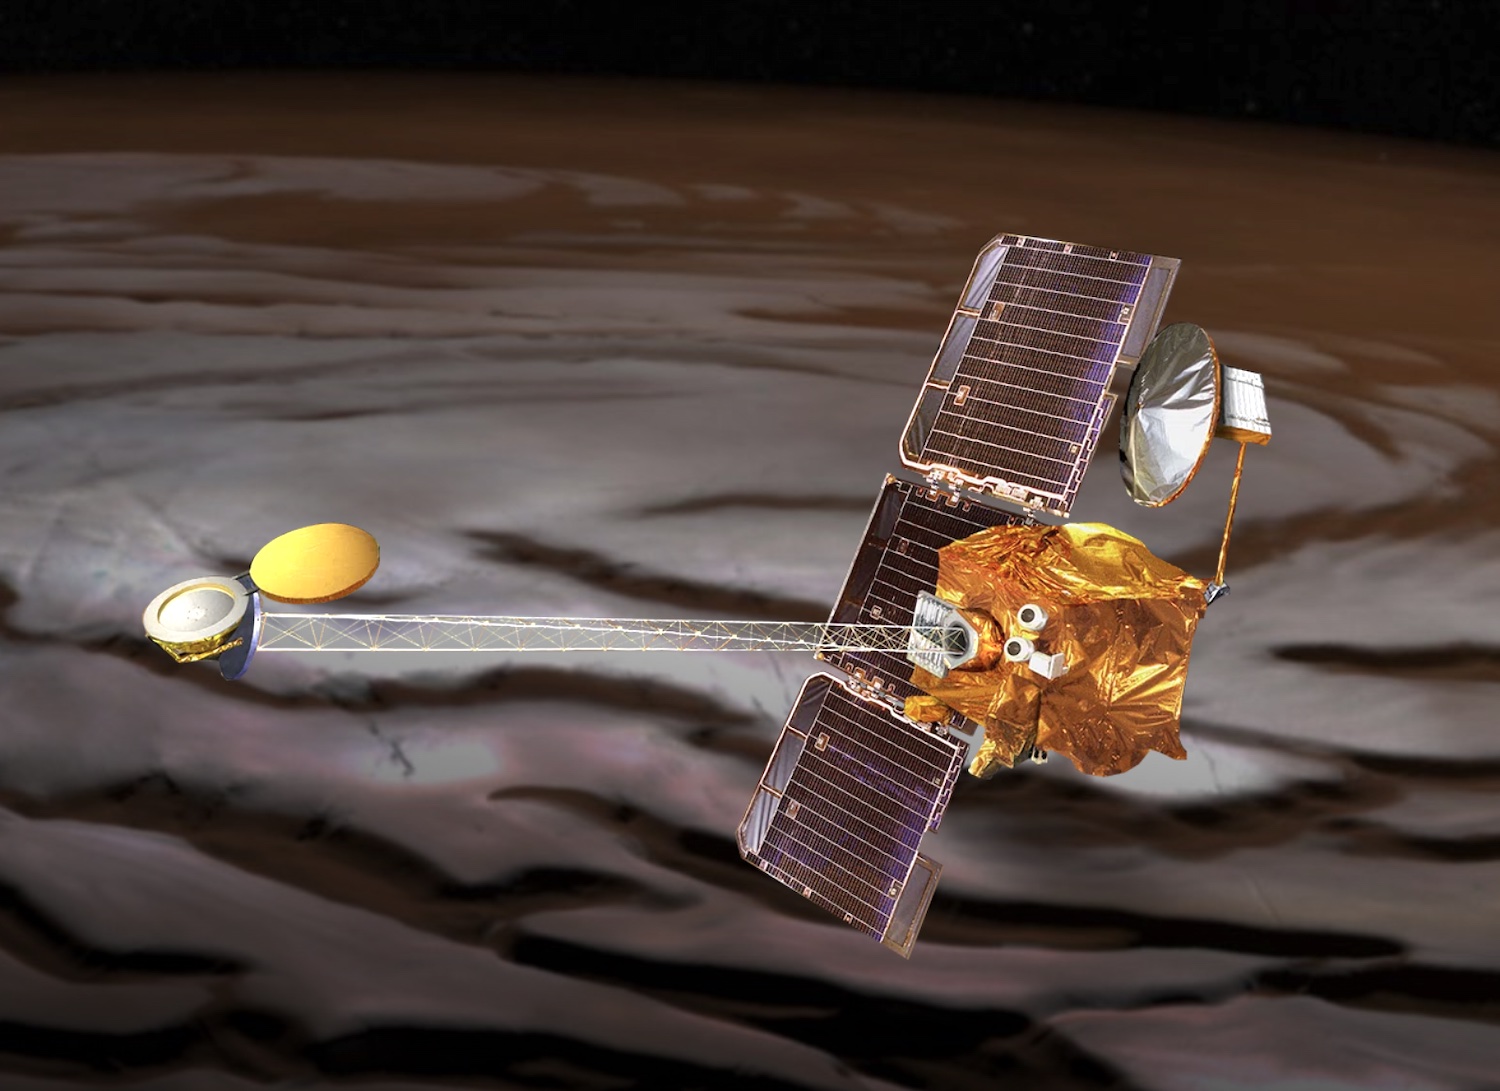 NASA's Mars Odyssey Orbiter.